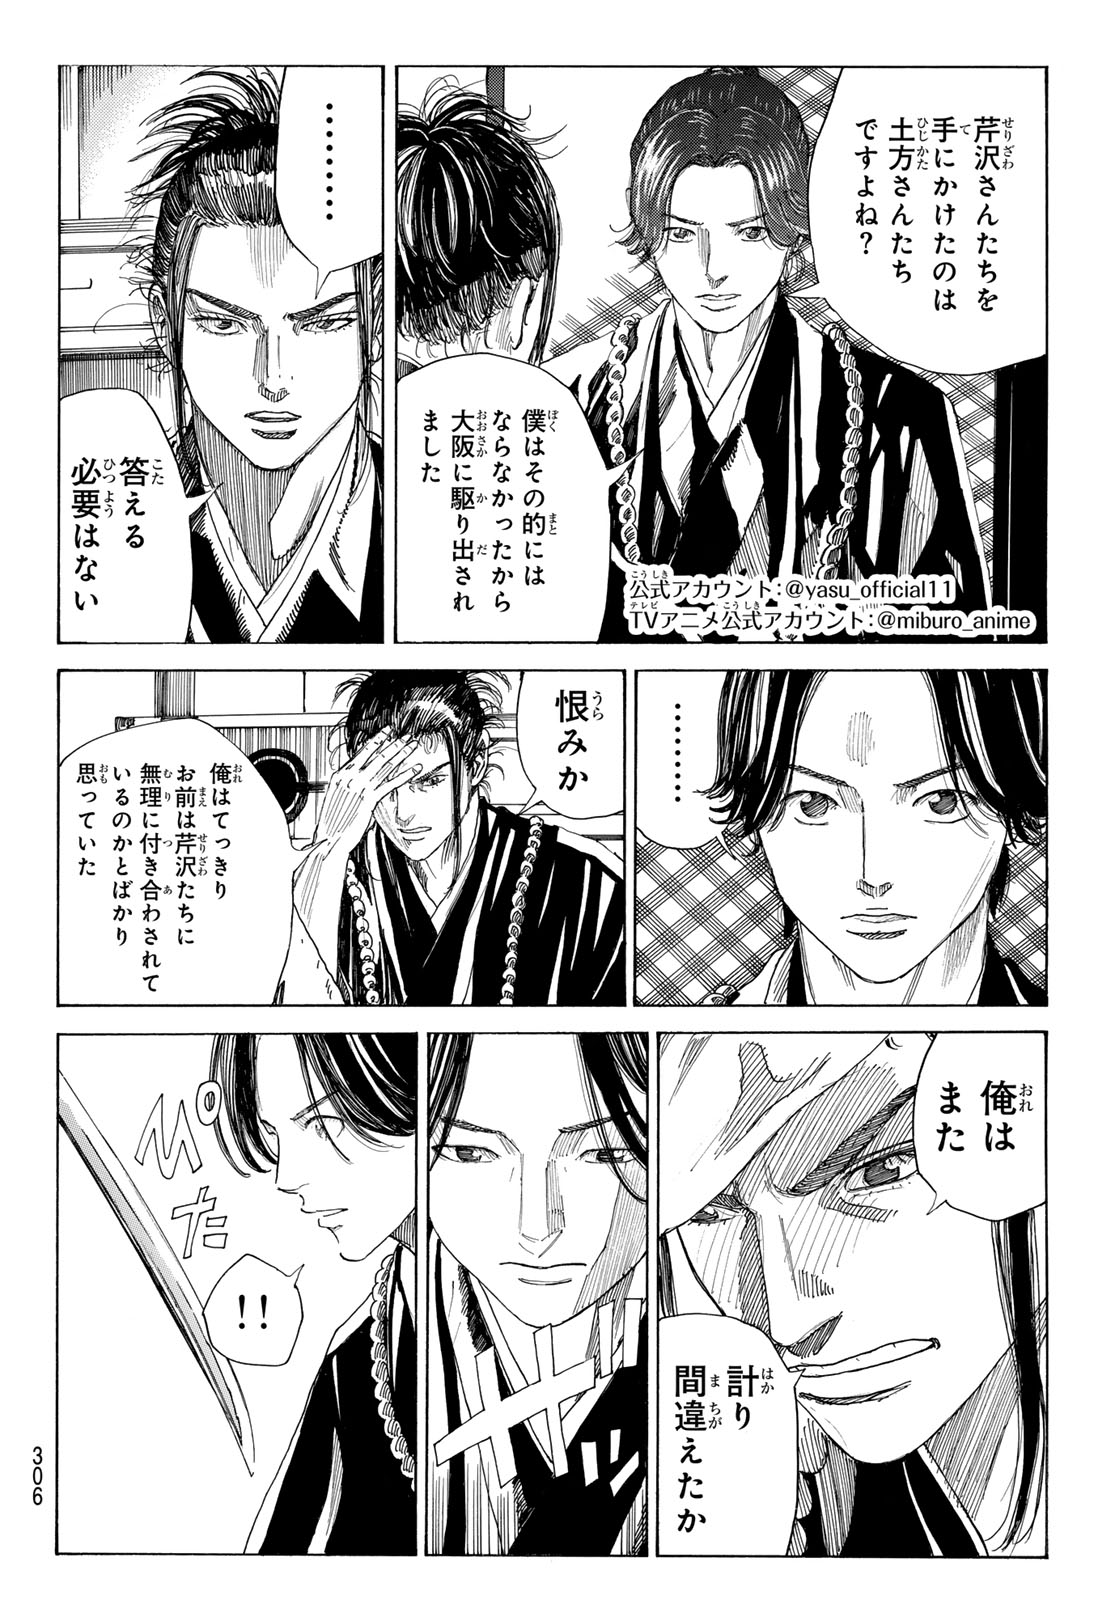 Ao no Miburo - Chapter 135 - Page 2